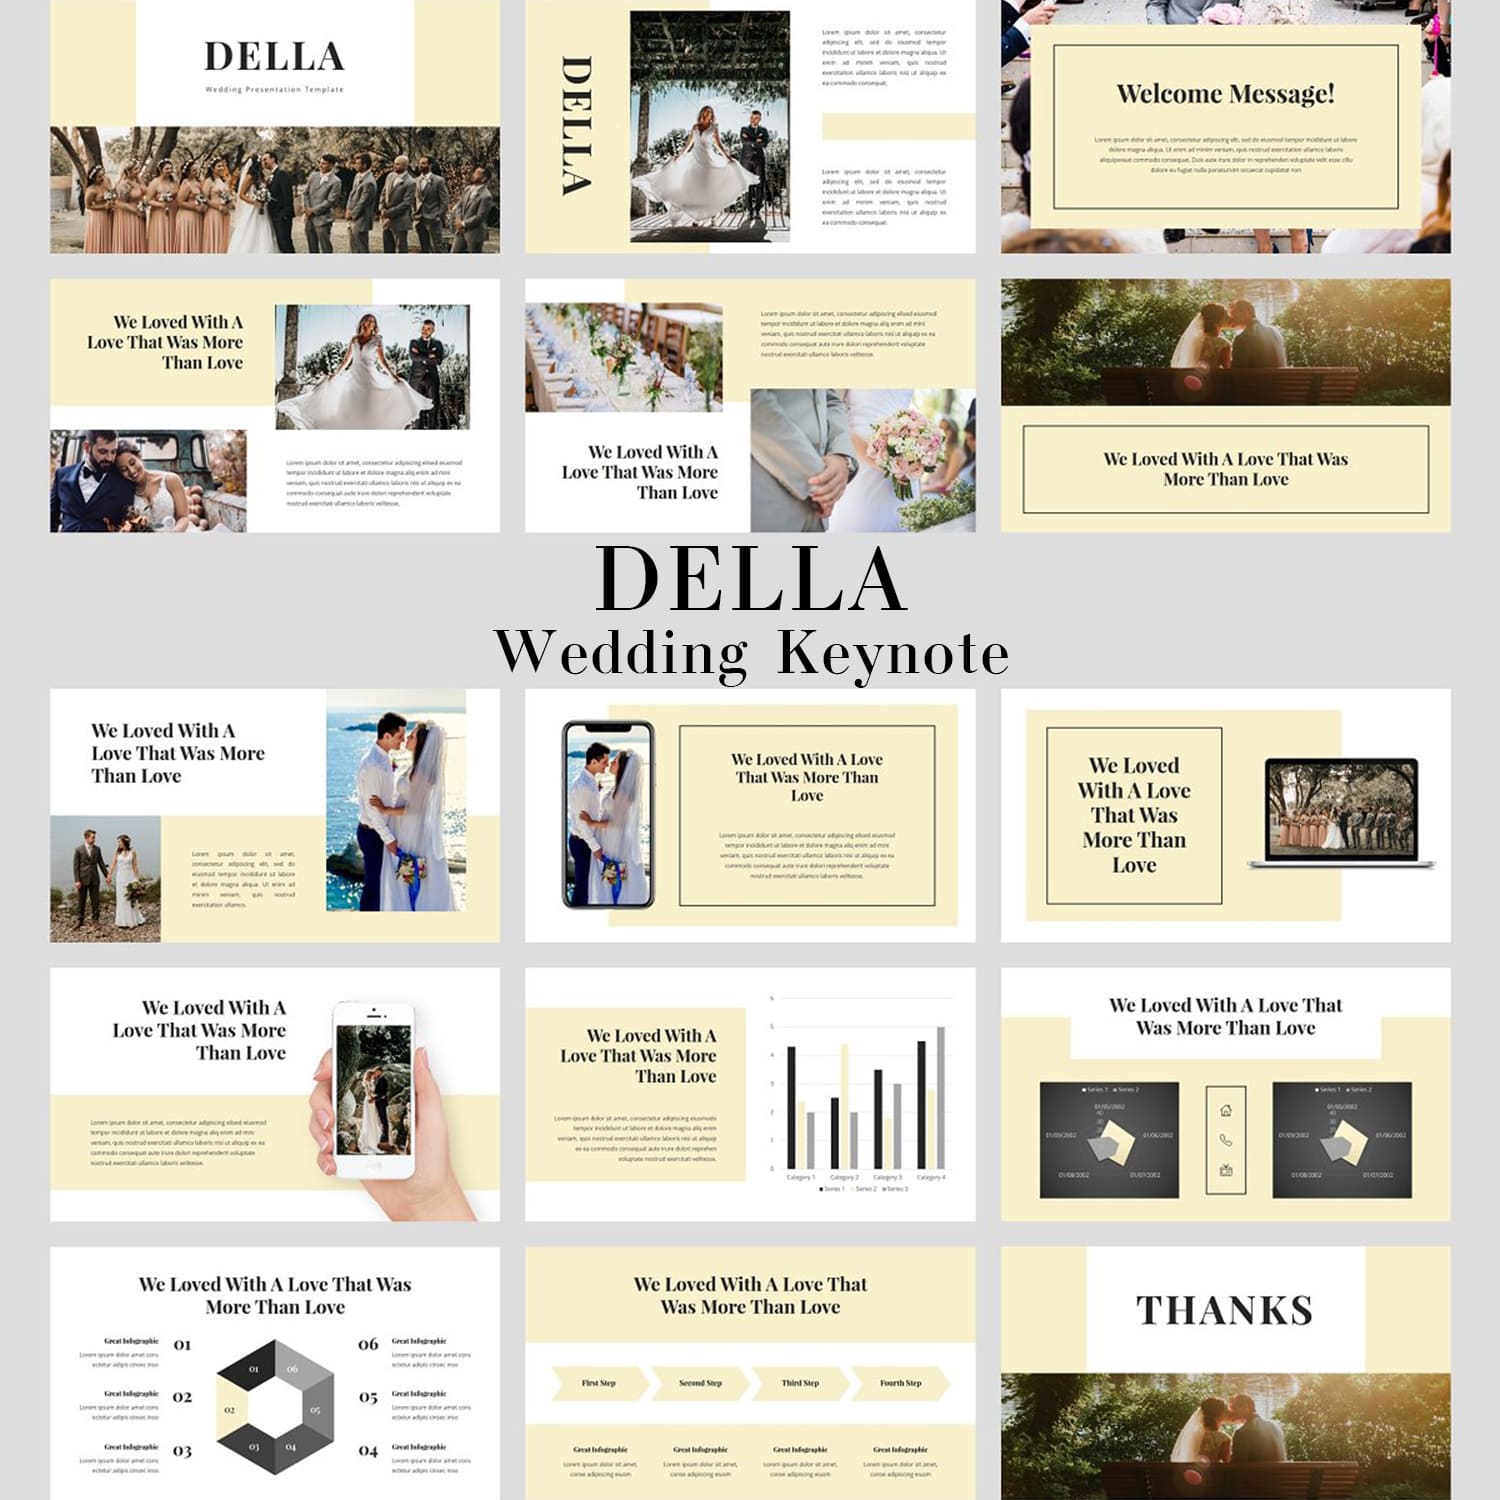 Della - Wedding Keynote cover image.